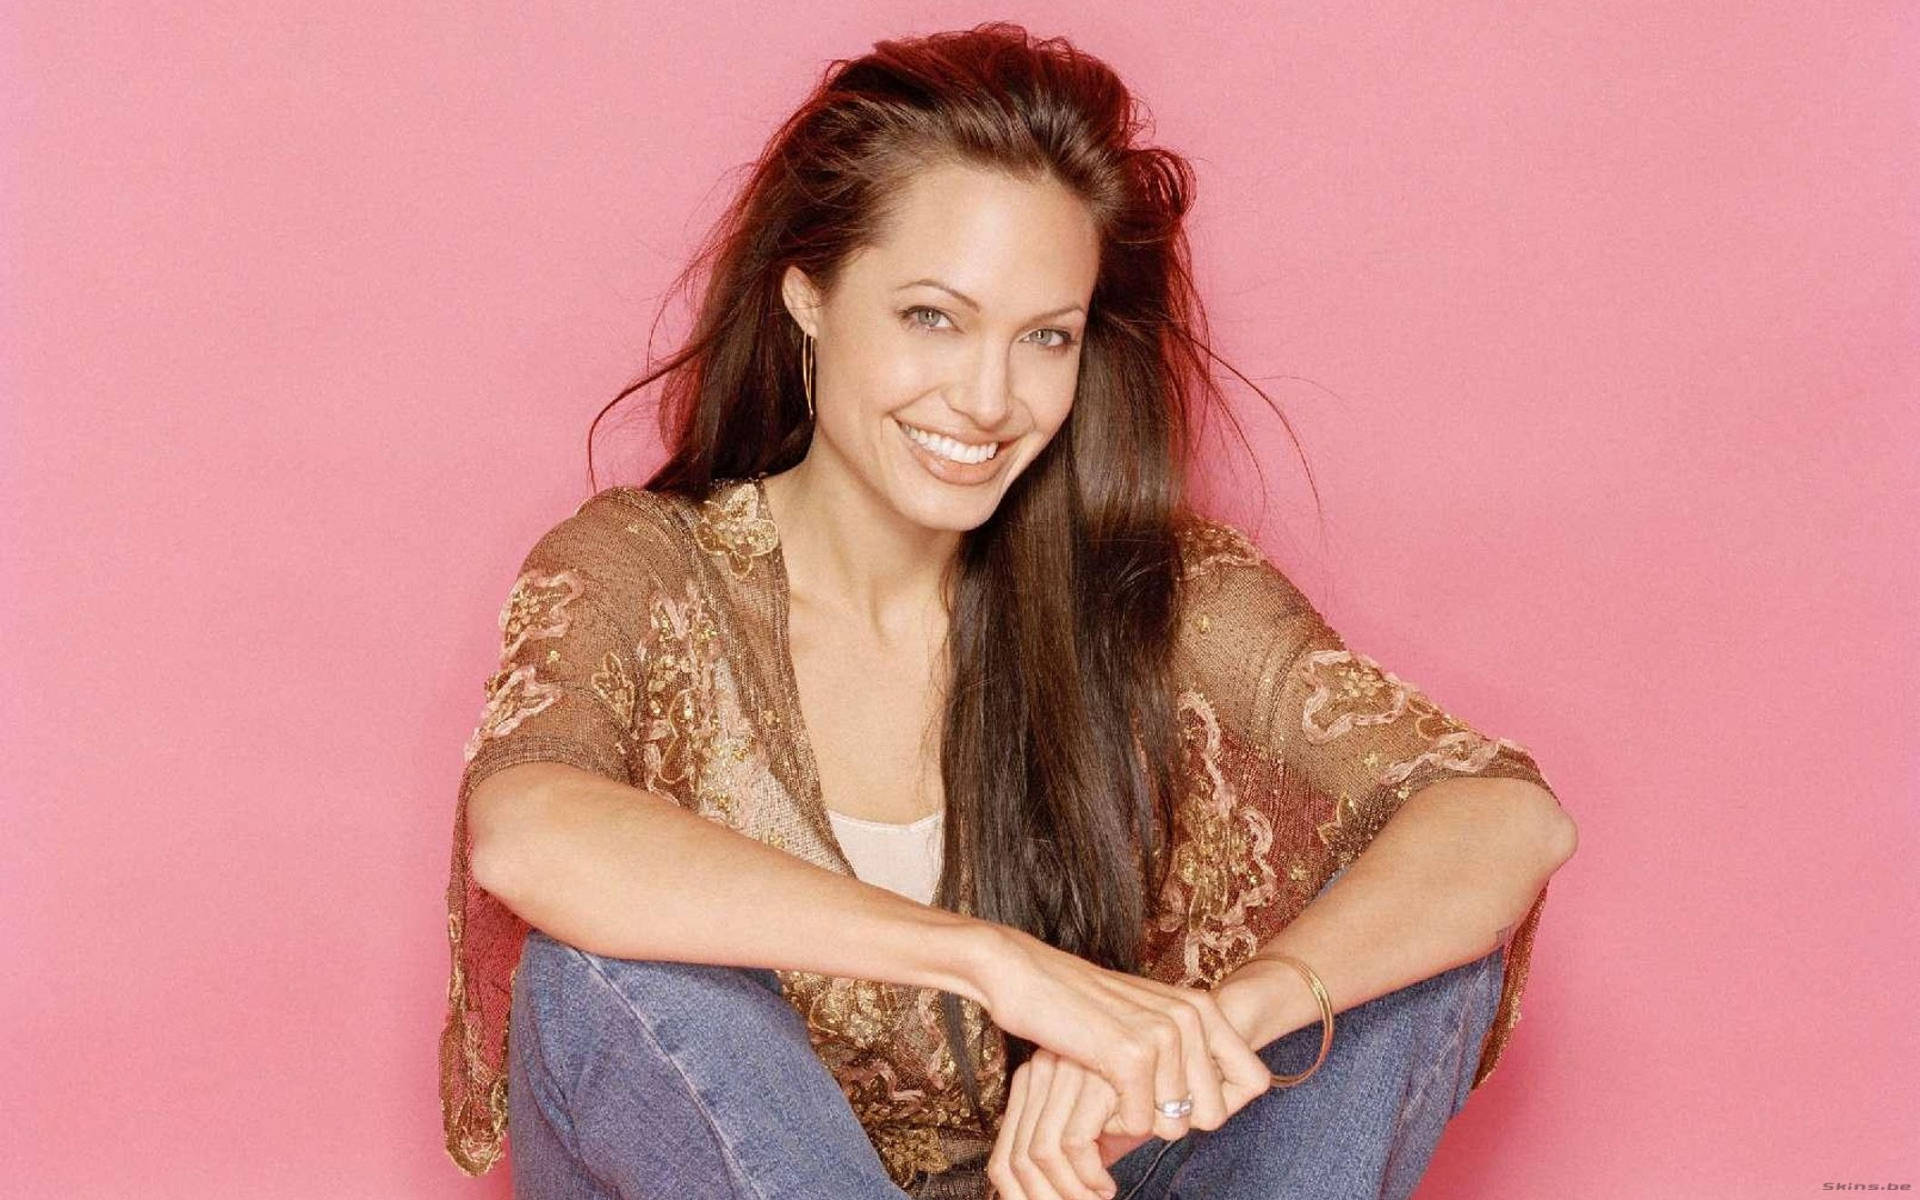 Casual-looking Angelina Jolie Photoshoot Background